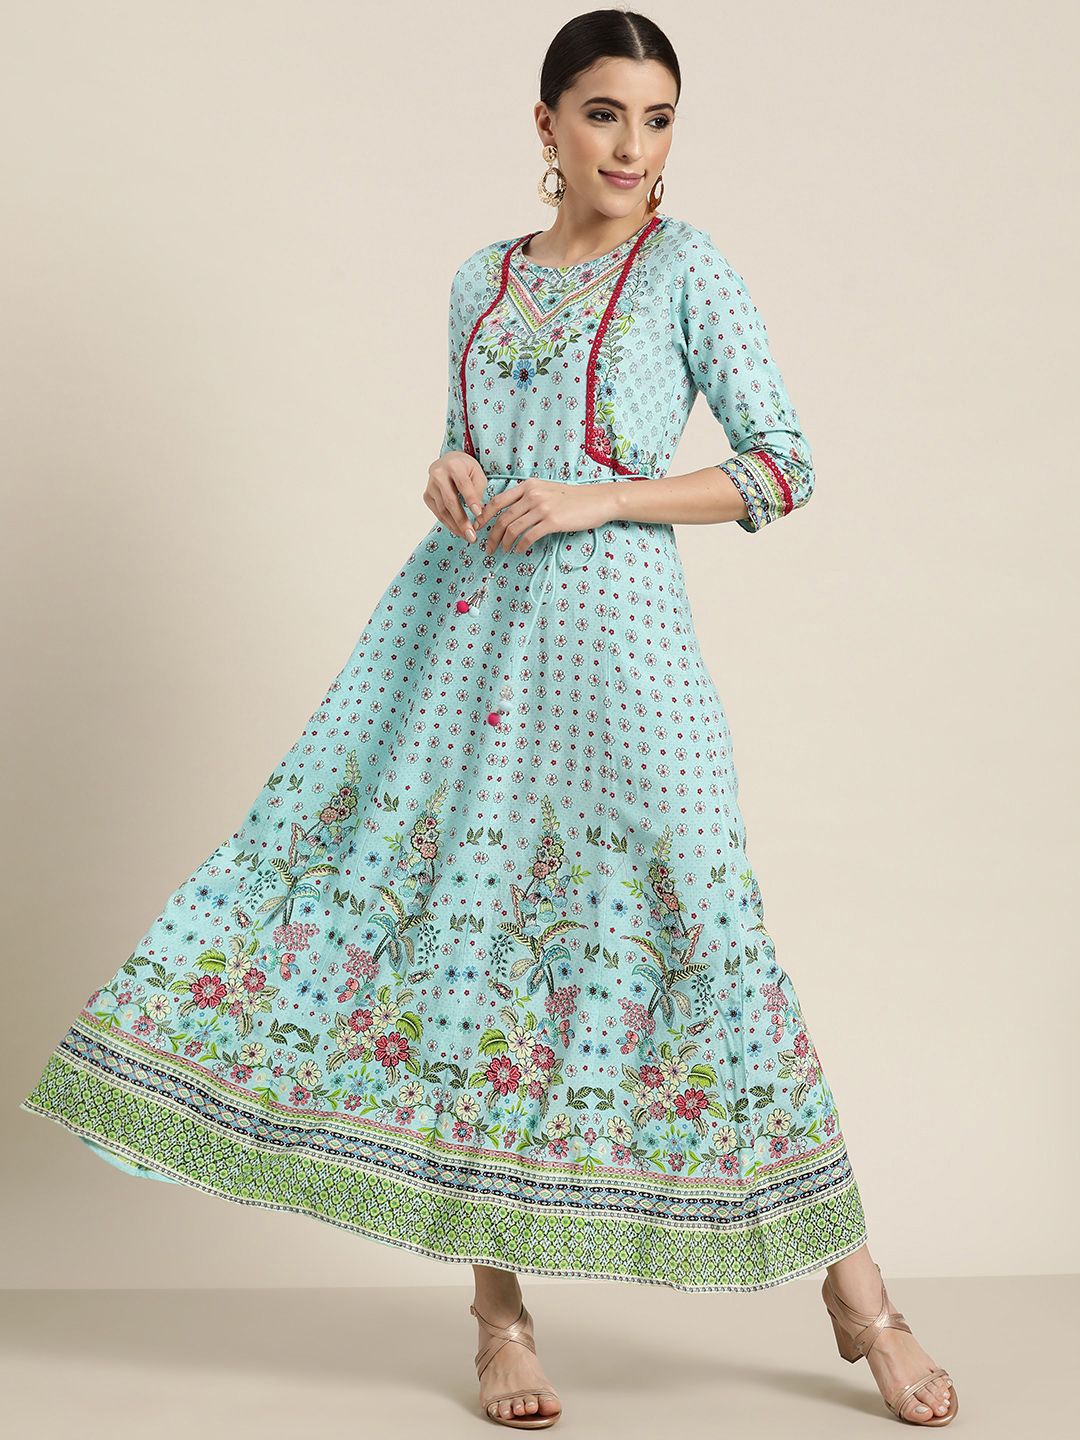 Juniper Turquoise Blue Floral Ethnic Maxi Dress Price in India